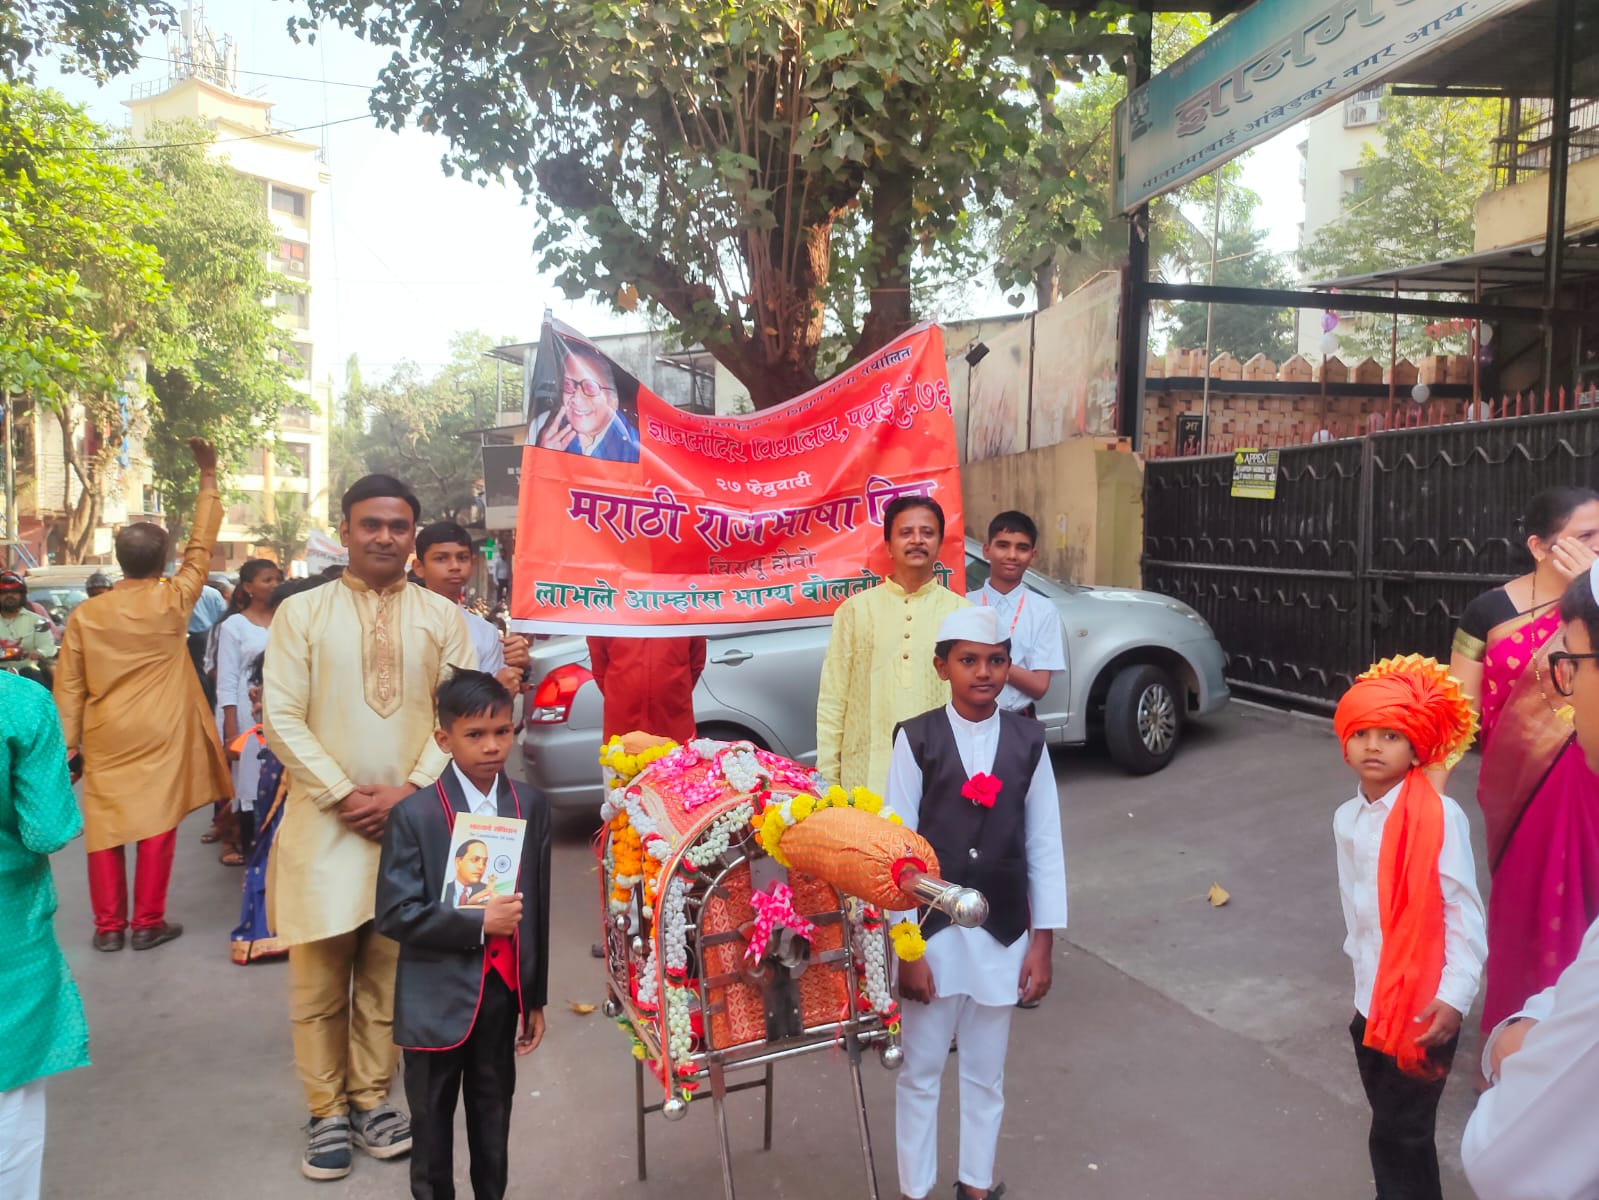 Gyan Mandir Secondary School Celebrates ‘Marathi Bhasha Diwas’ with Enthusiasm and Cultural Activities